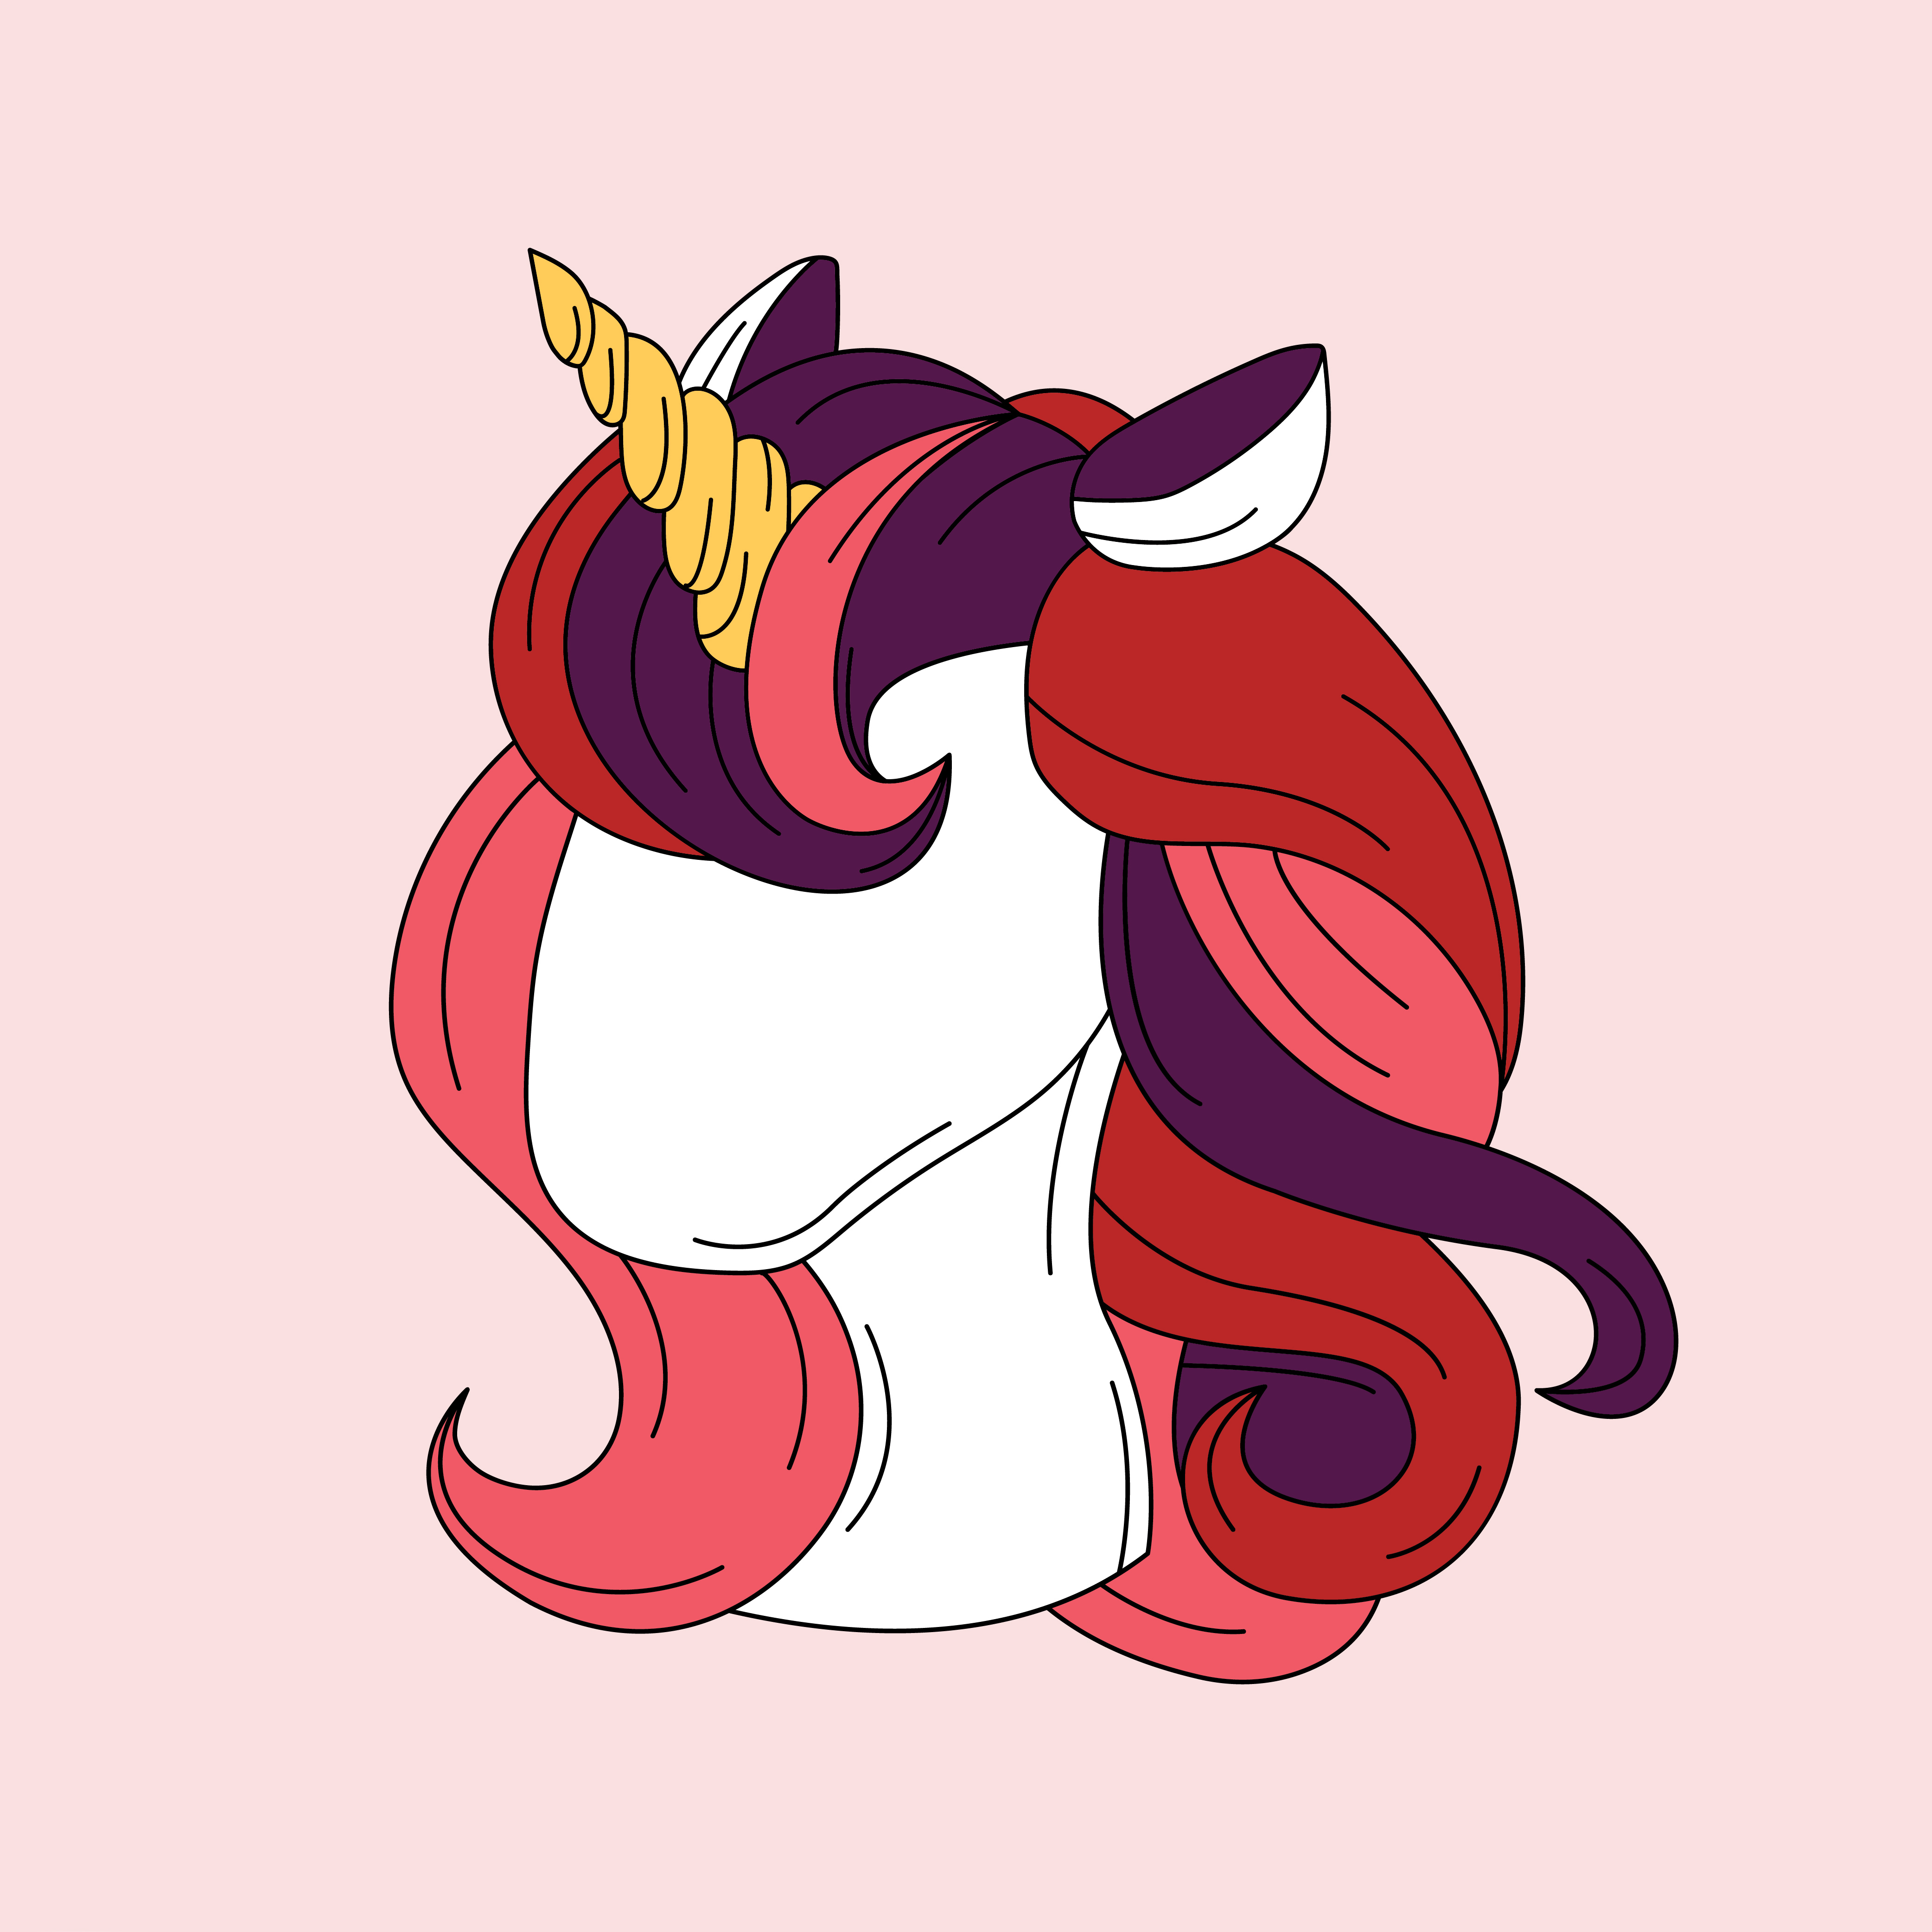 Download Cute and magical unicorn vector - Download Free Vectors ...